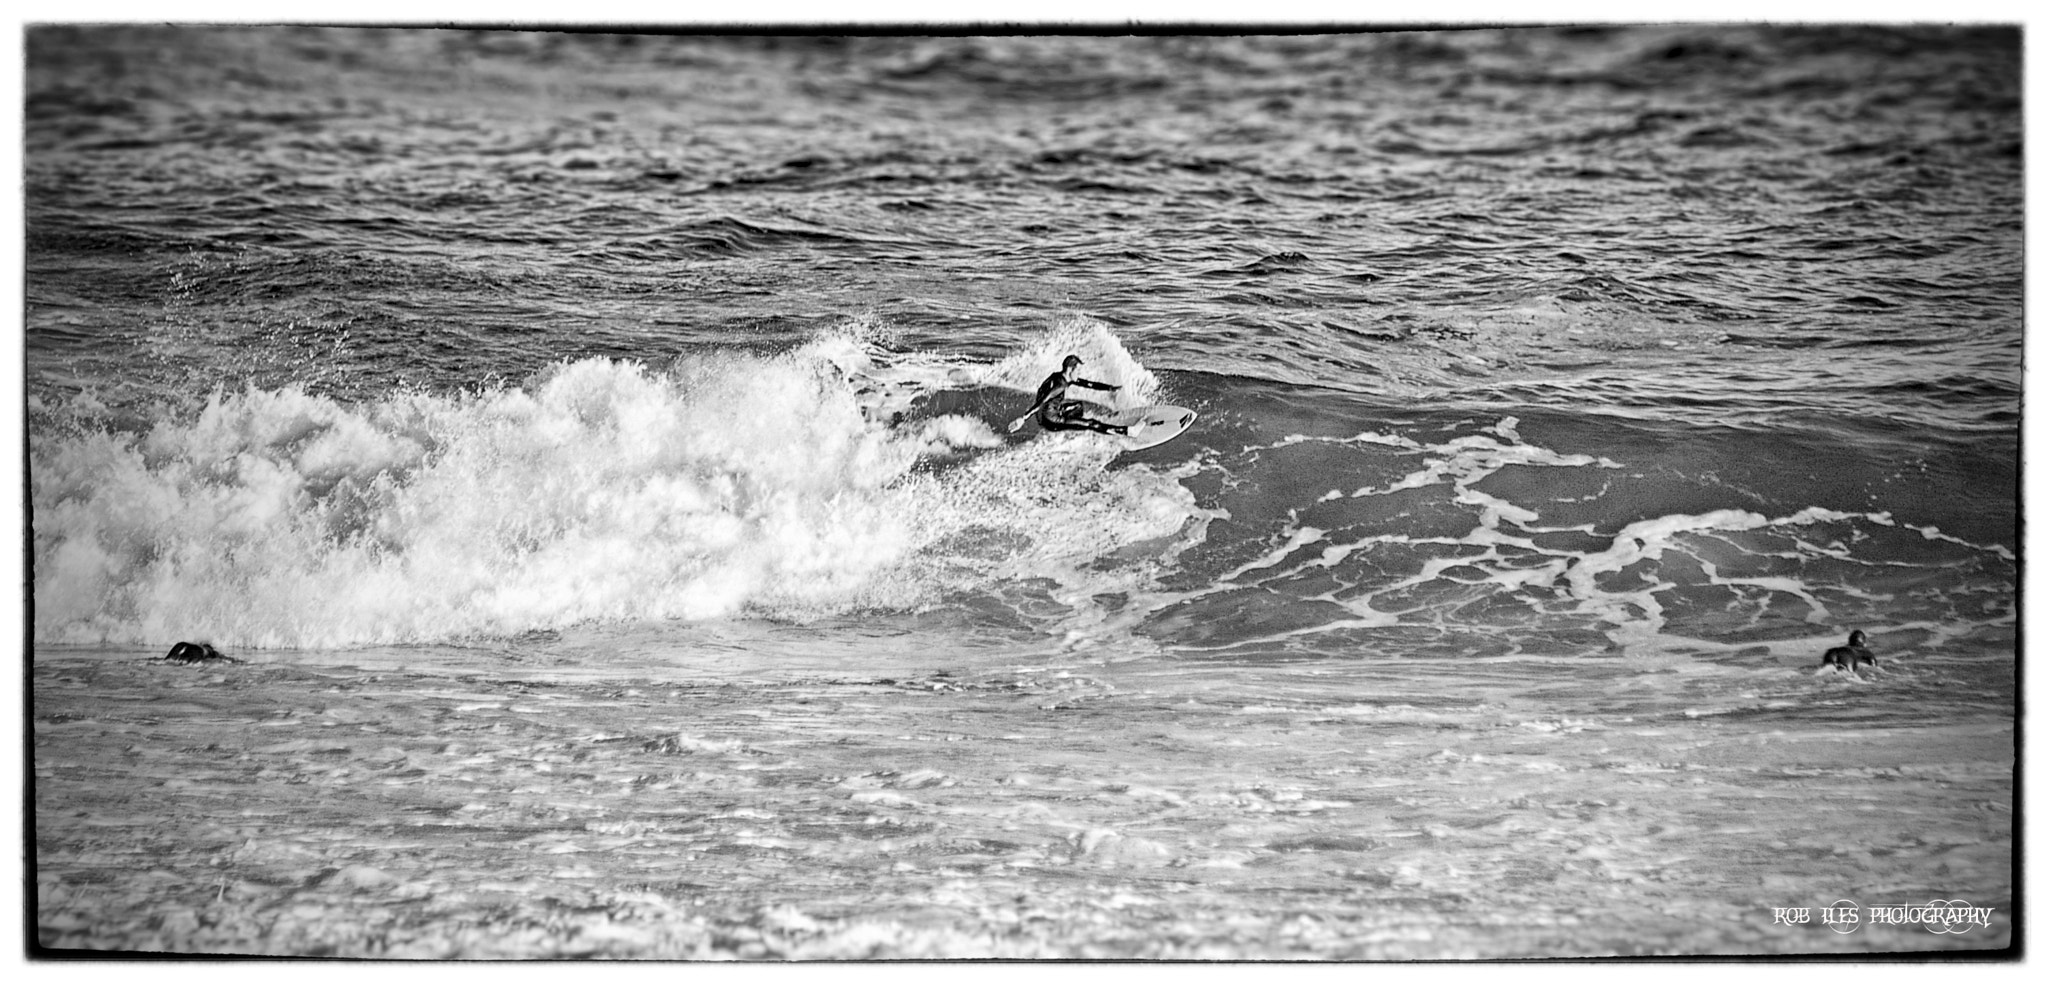 Pentax *ist DL + Sigma sample photo. Bombo surfer photography